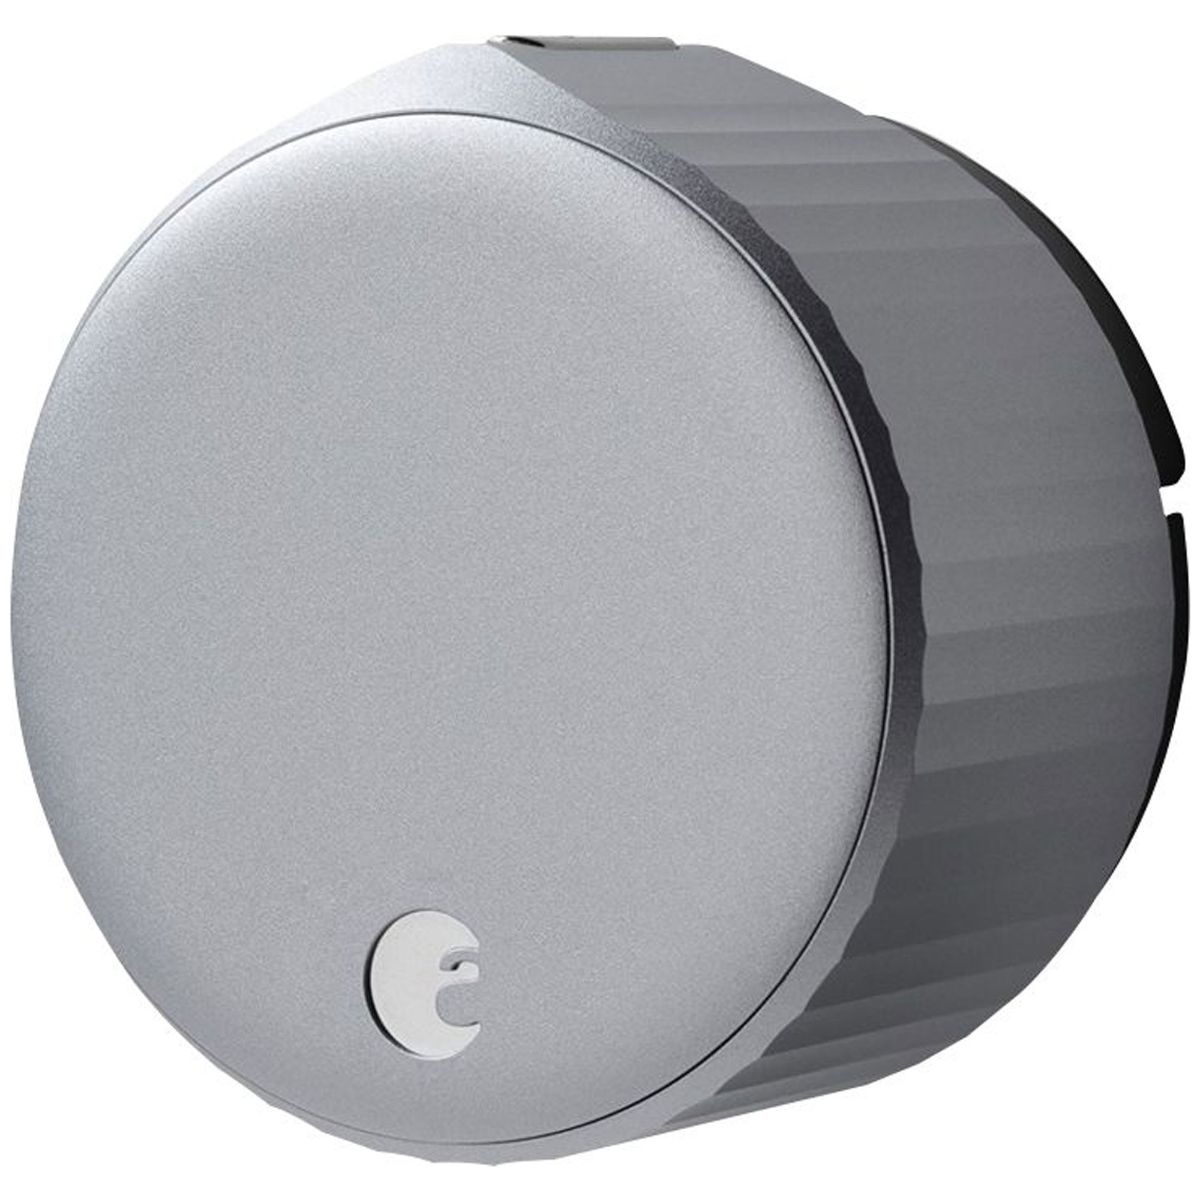 August Smart Lock 2nd Generation - HomeKit Enabled - Silver (AUG-SL02-M02-S02)